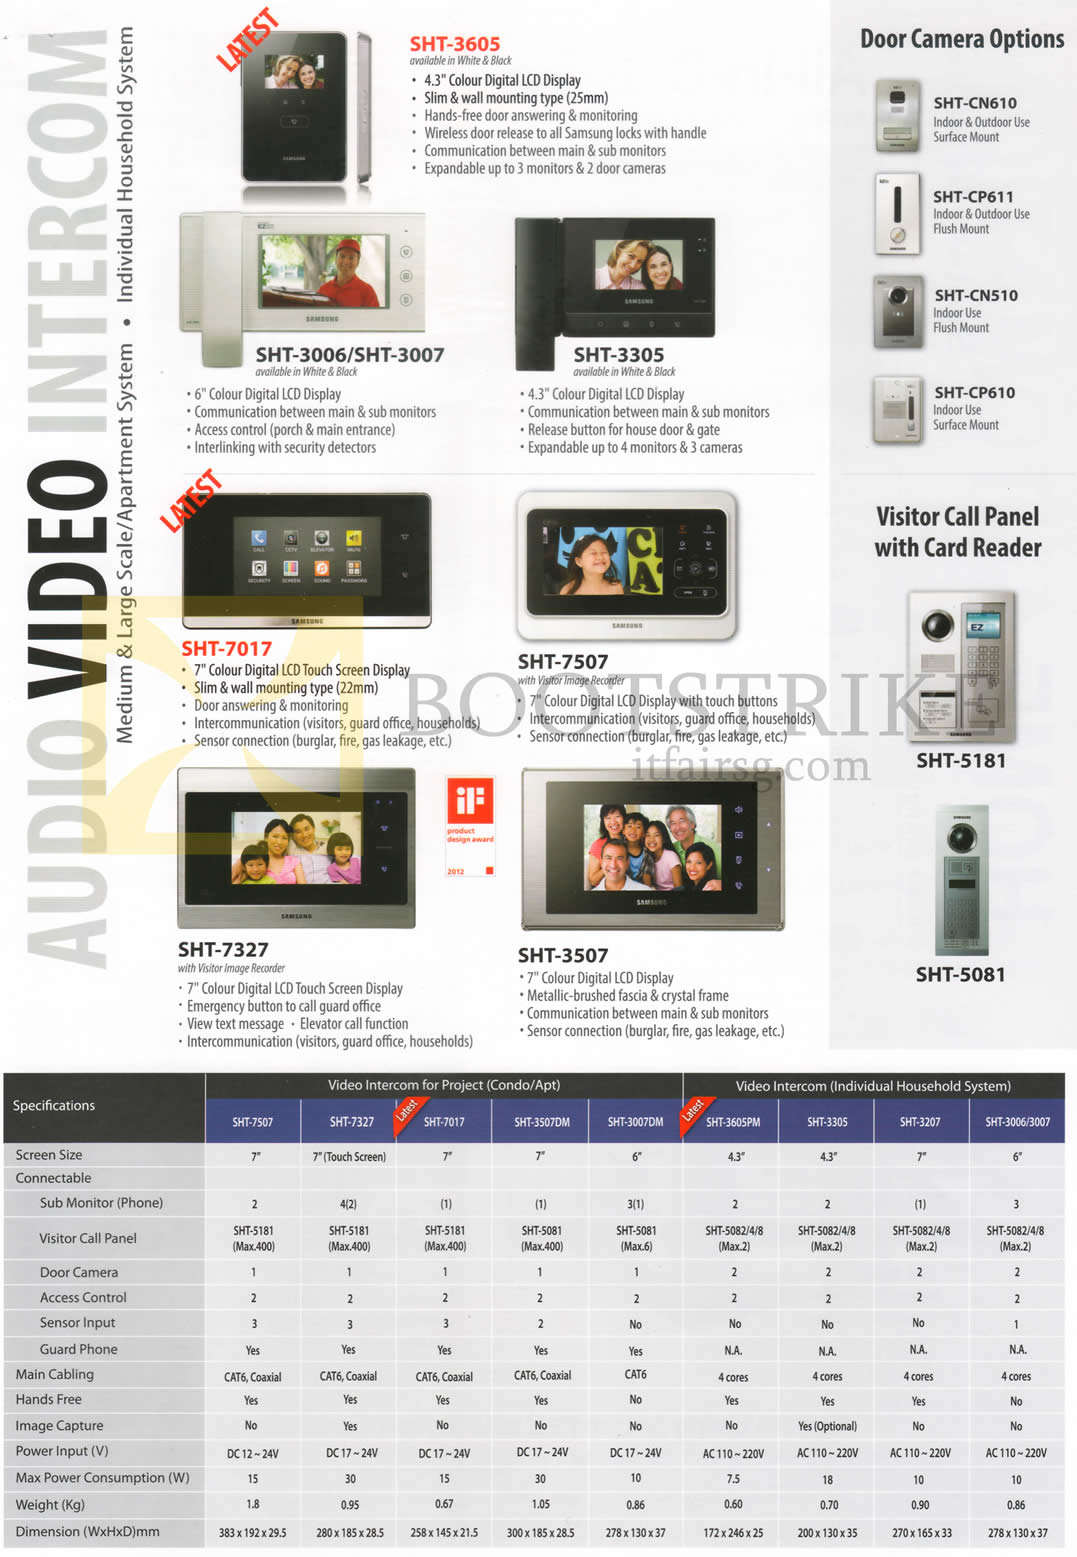 IT SHOW 2015 price list image brochure of Hanman Audio Video Intercom SHT-3605, 3006, 3305, 7017, 7507, 7327, 3507, 5181, 5081, CN610, CP611, CN510, CP610